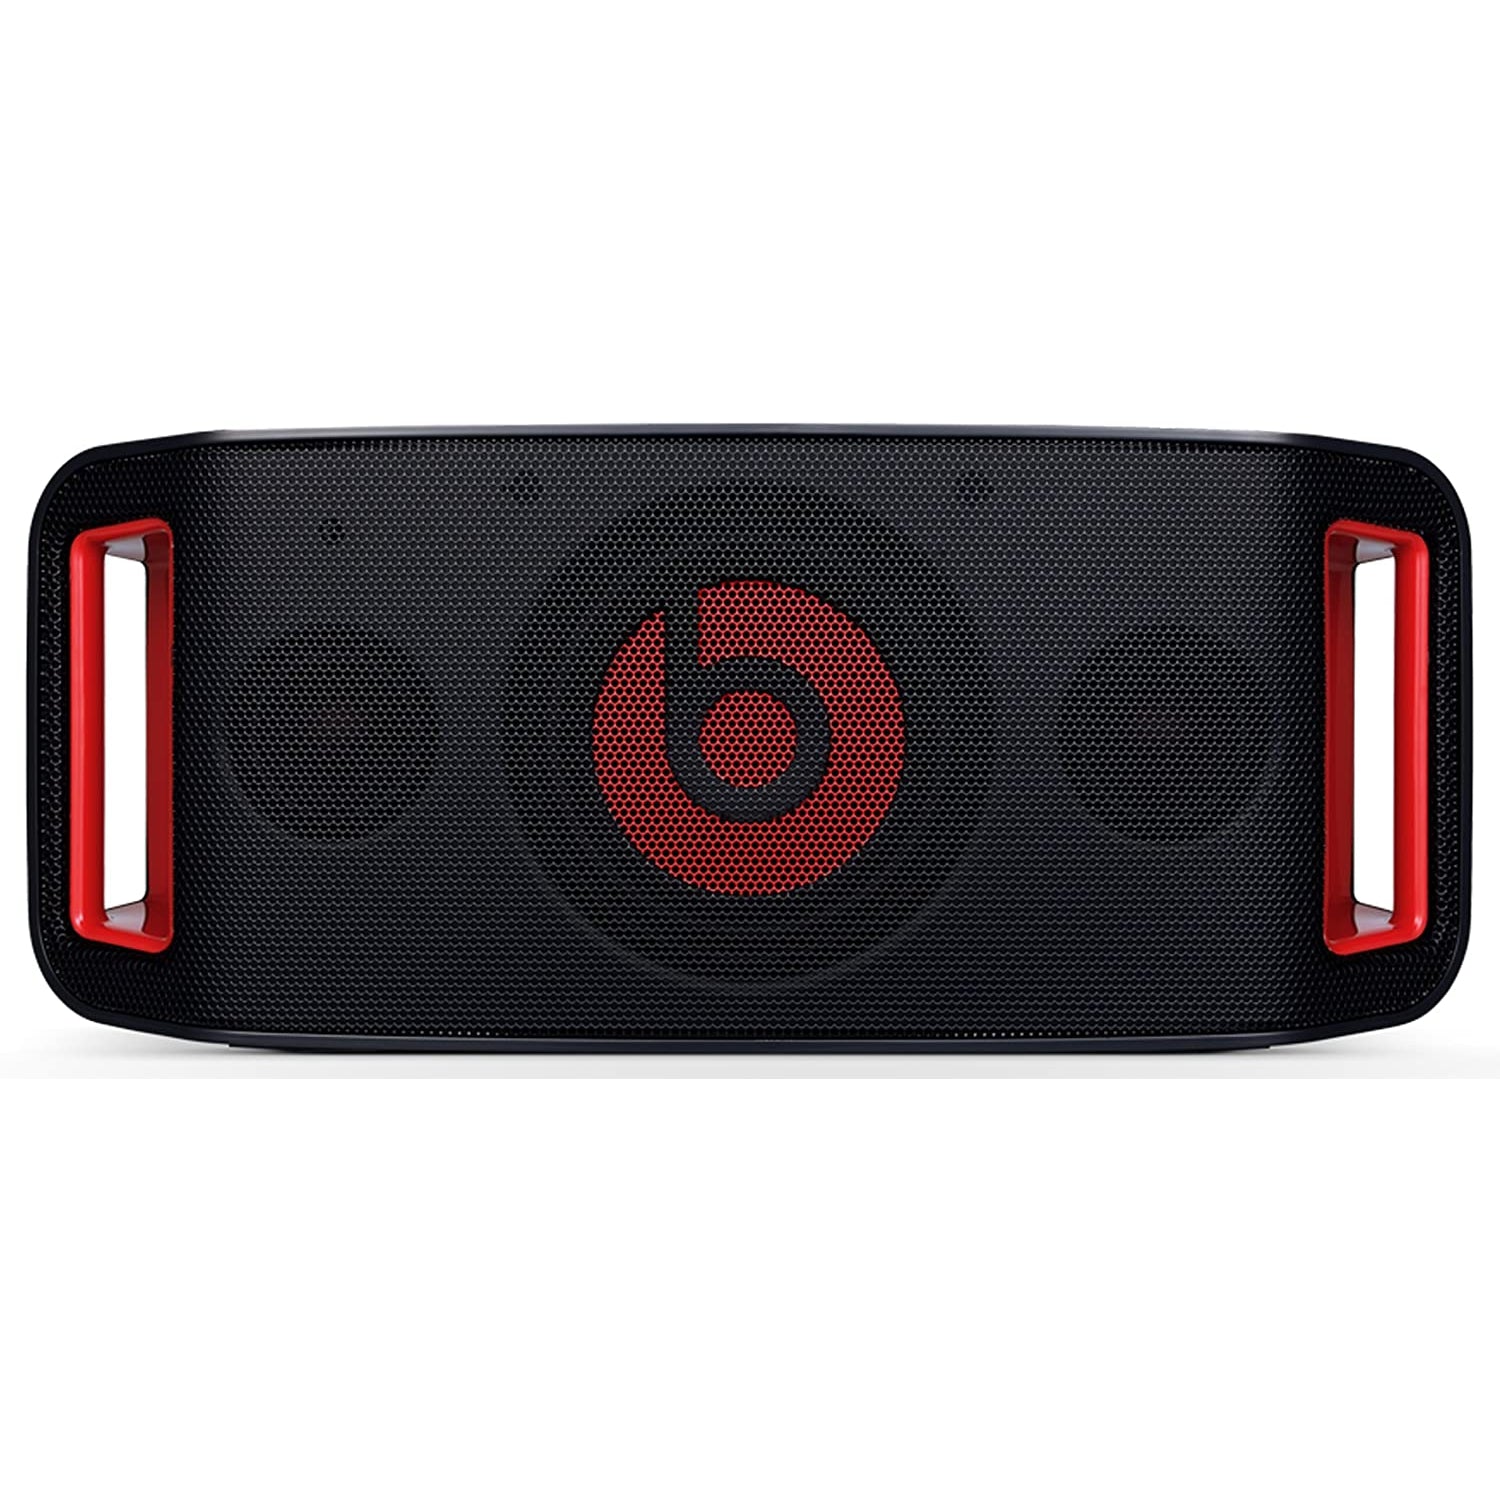 Beats by Dr. Dre Beatbox Portable Wireless Speaker - Black